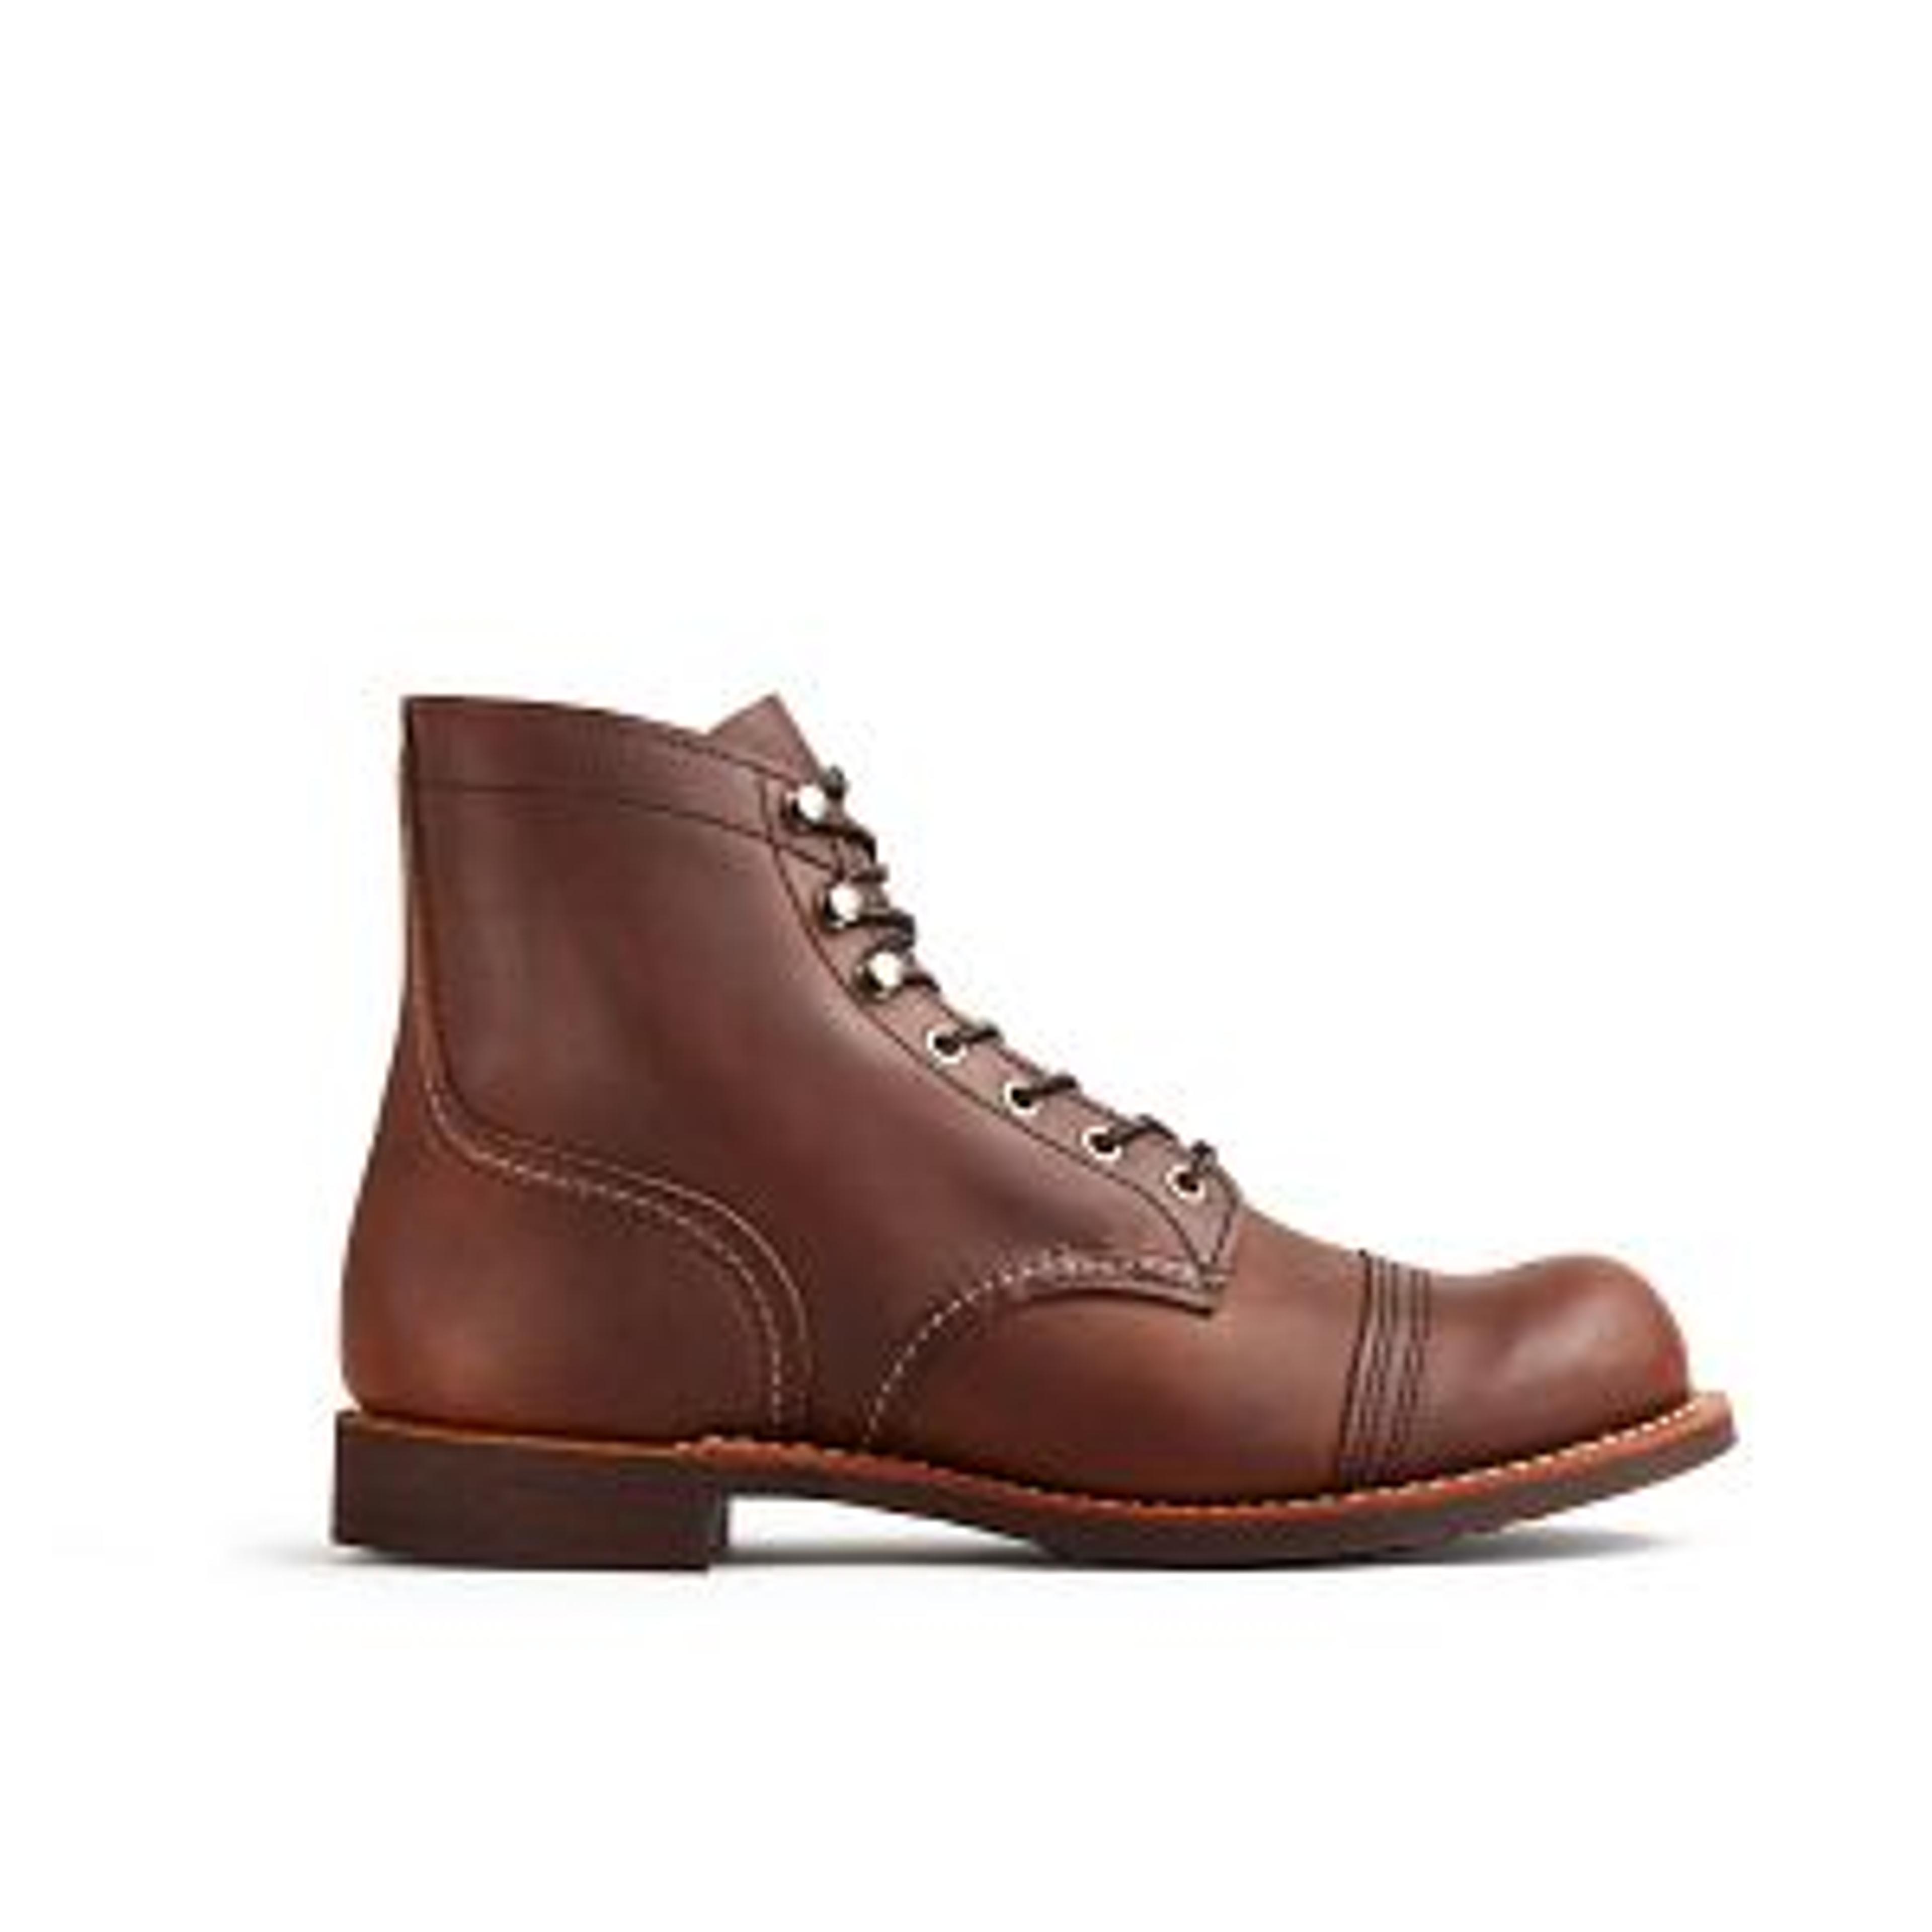 Men's Iron Ranger 6-Inch Boot in Dark Brown Leather 8111 | RedWing